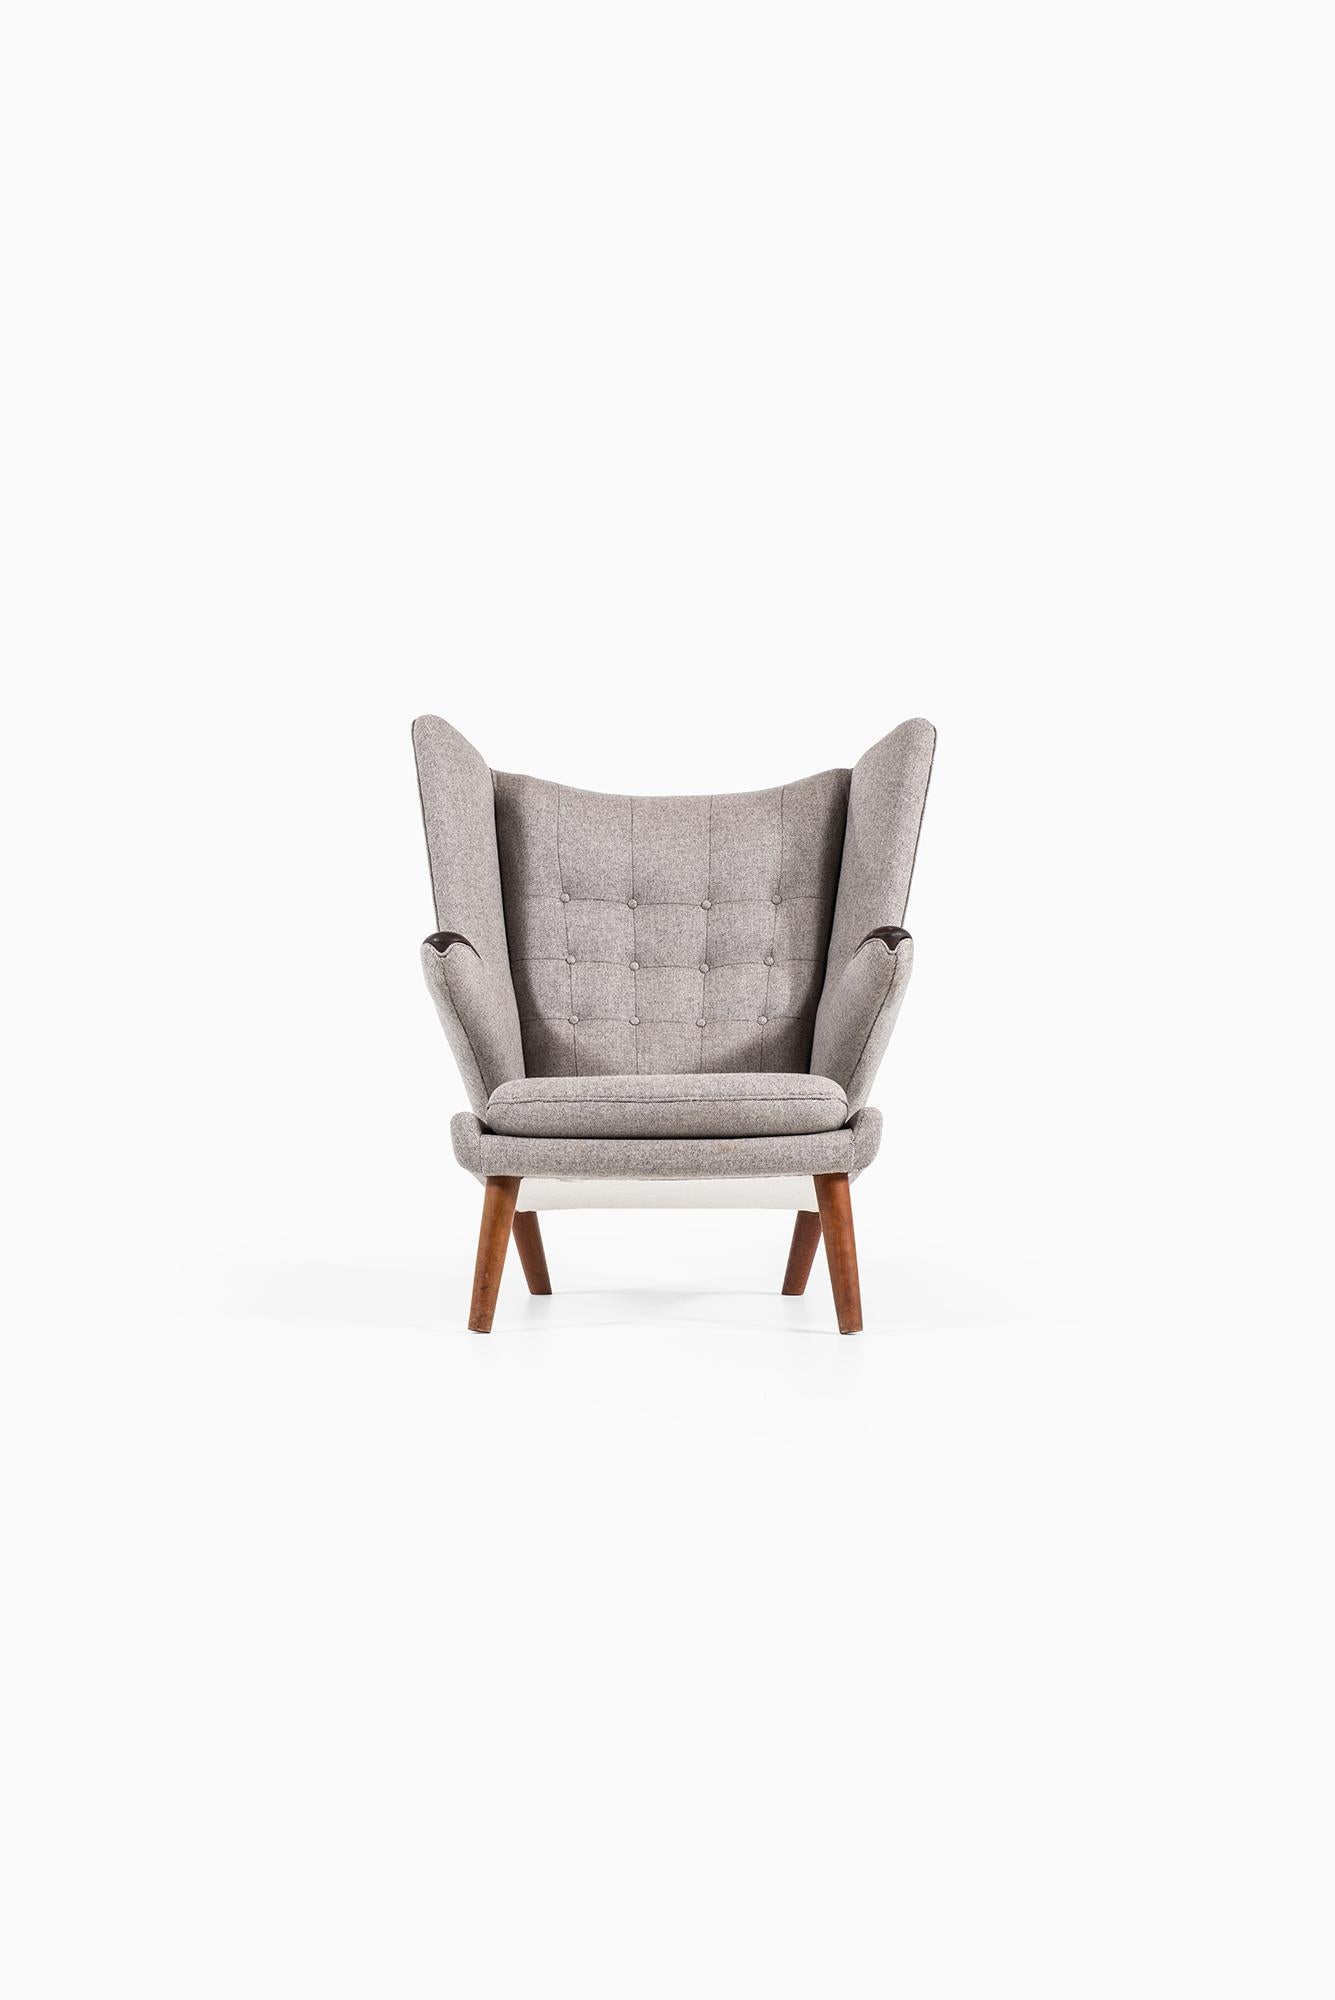 Rare easy chair model Papa bear designed by Hans Wegner. Produced by A.P. Stolen in Denmark.